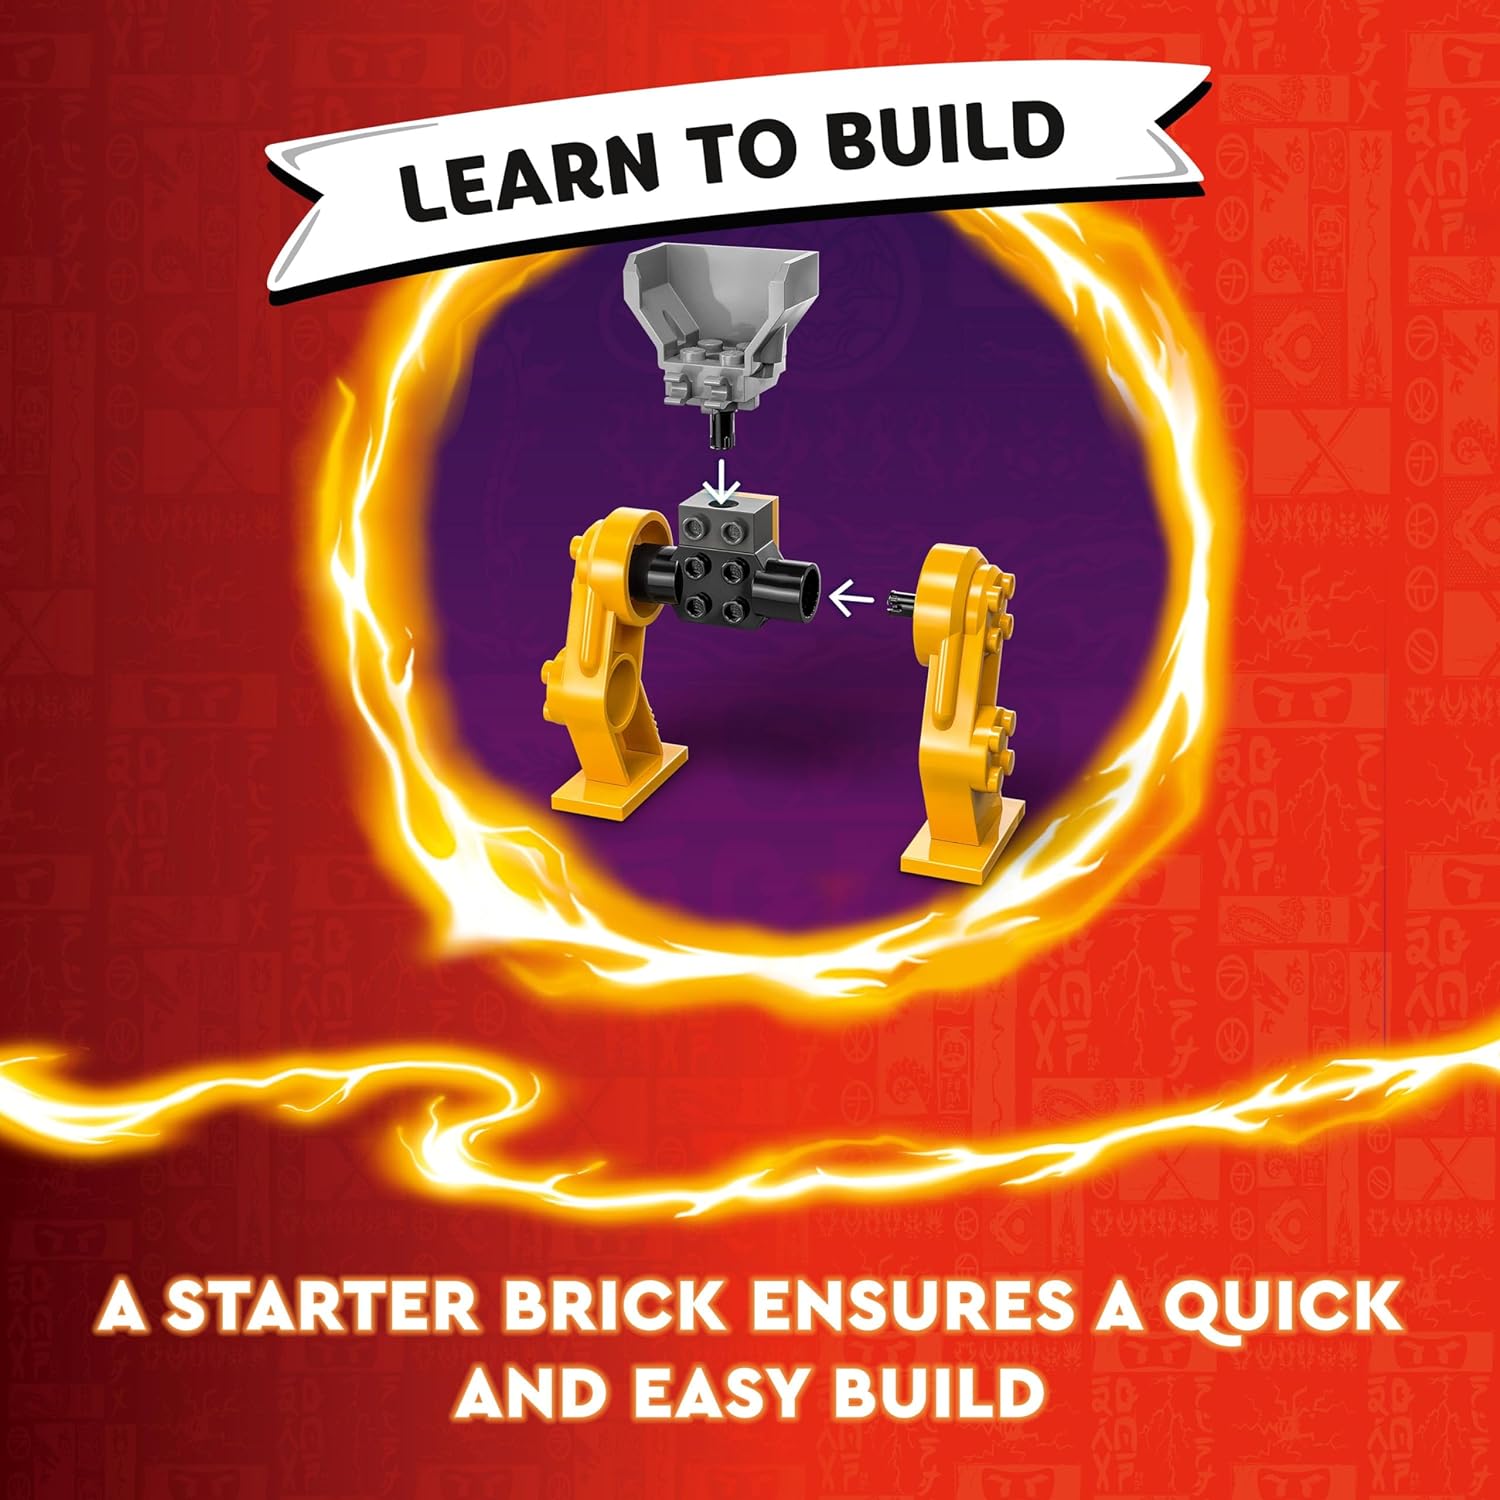 LEGO NINJAGO Arin’s Battle Mech Ninja Toy Set Building Kit for Ages 4+